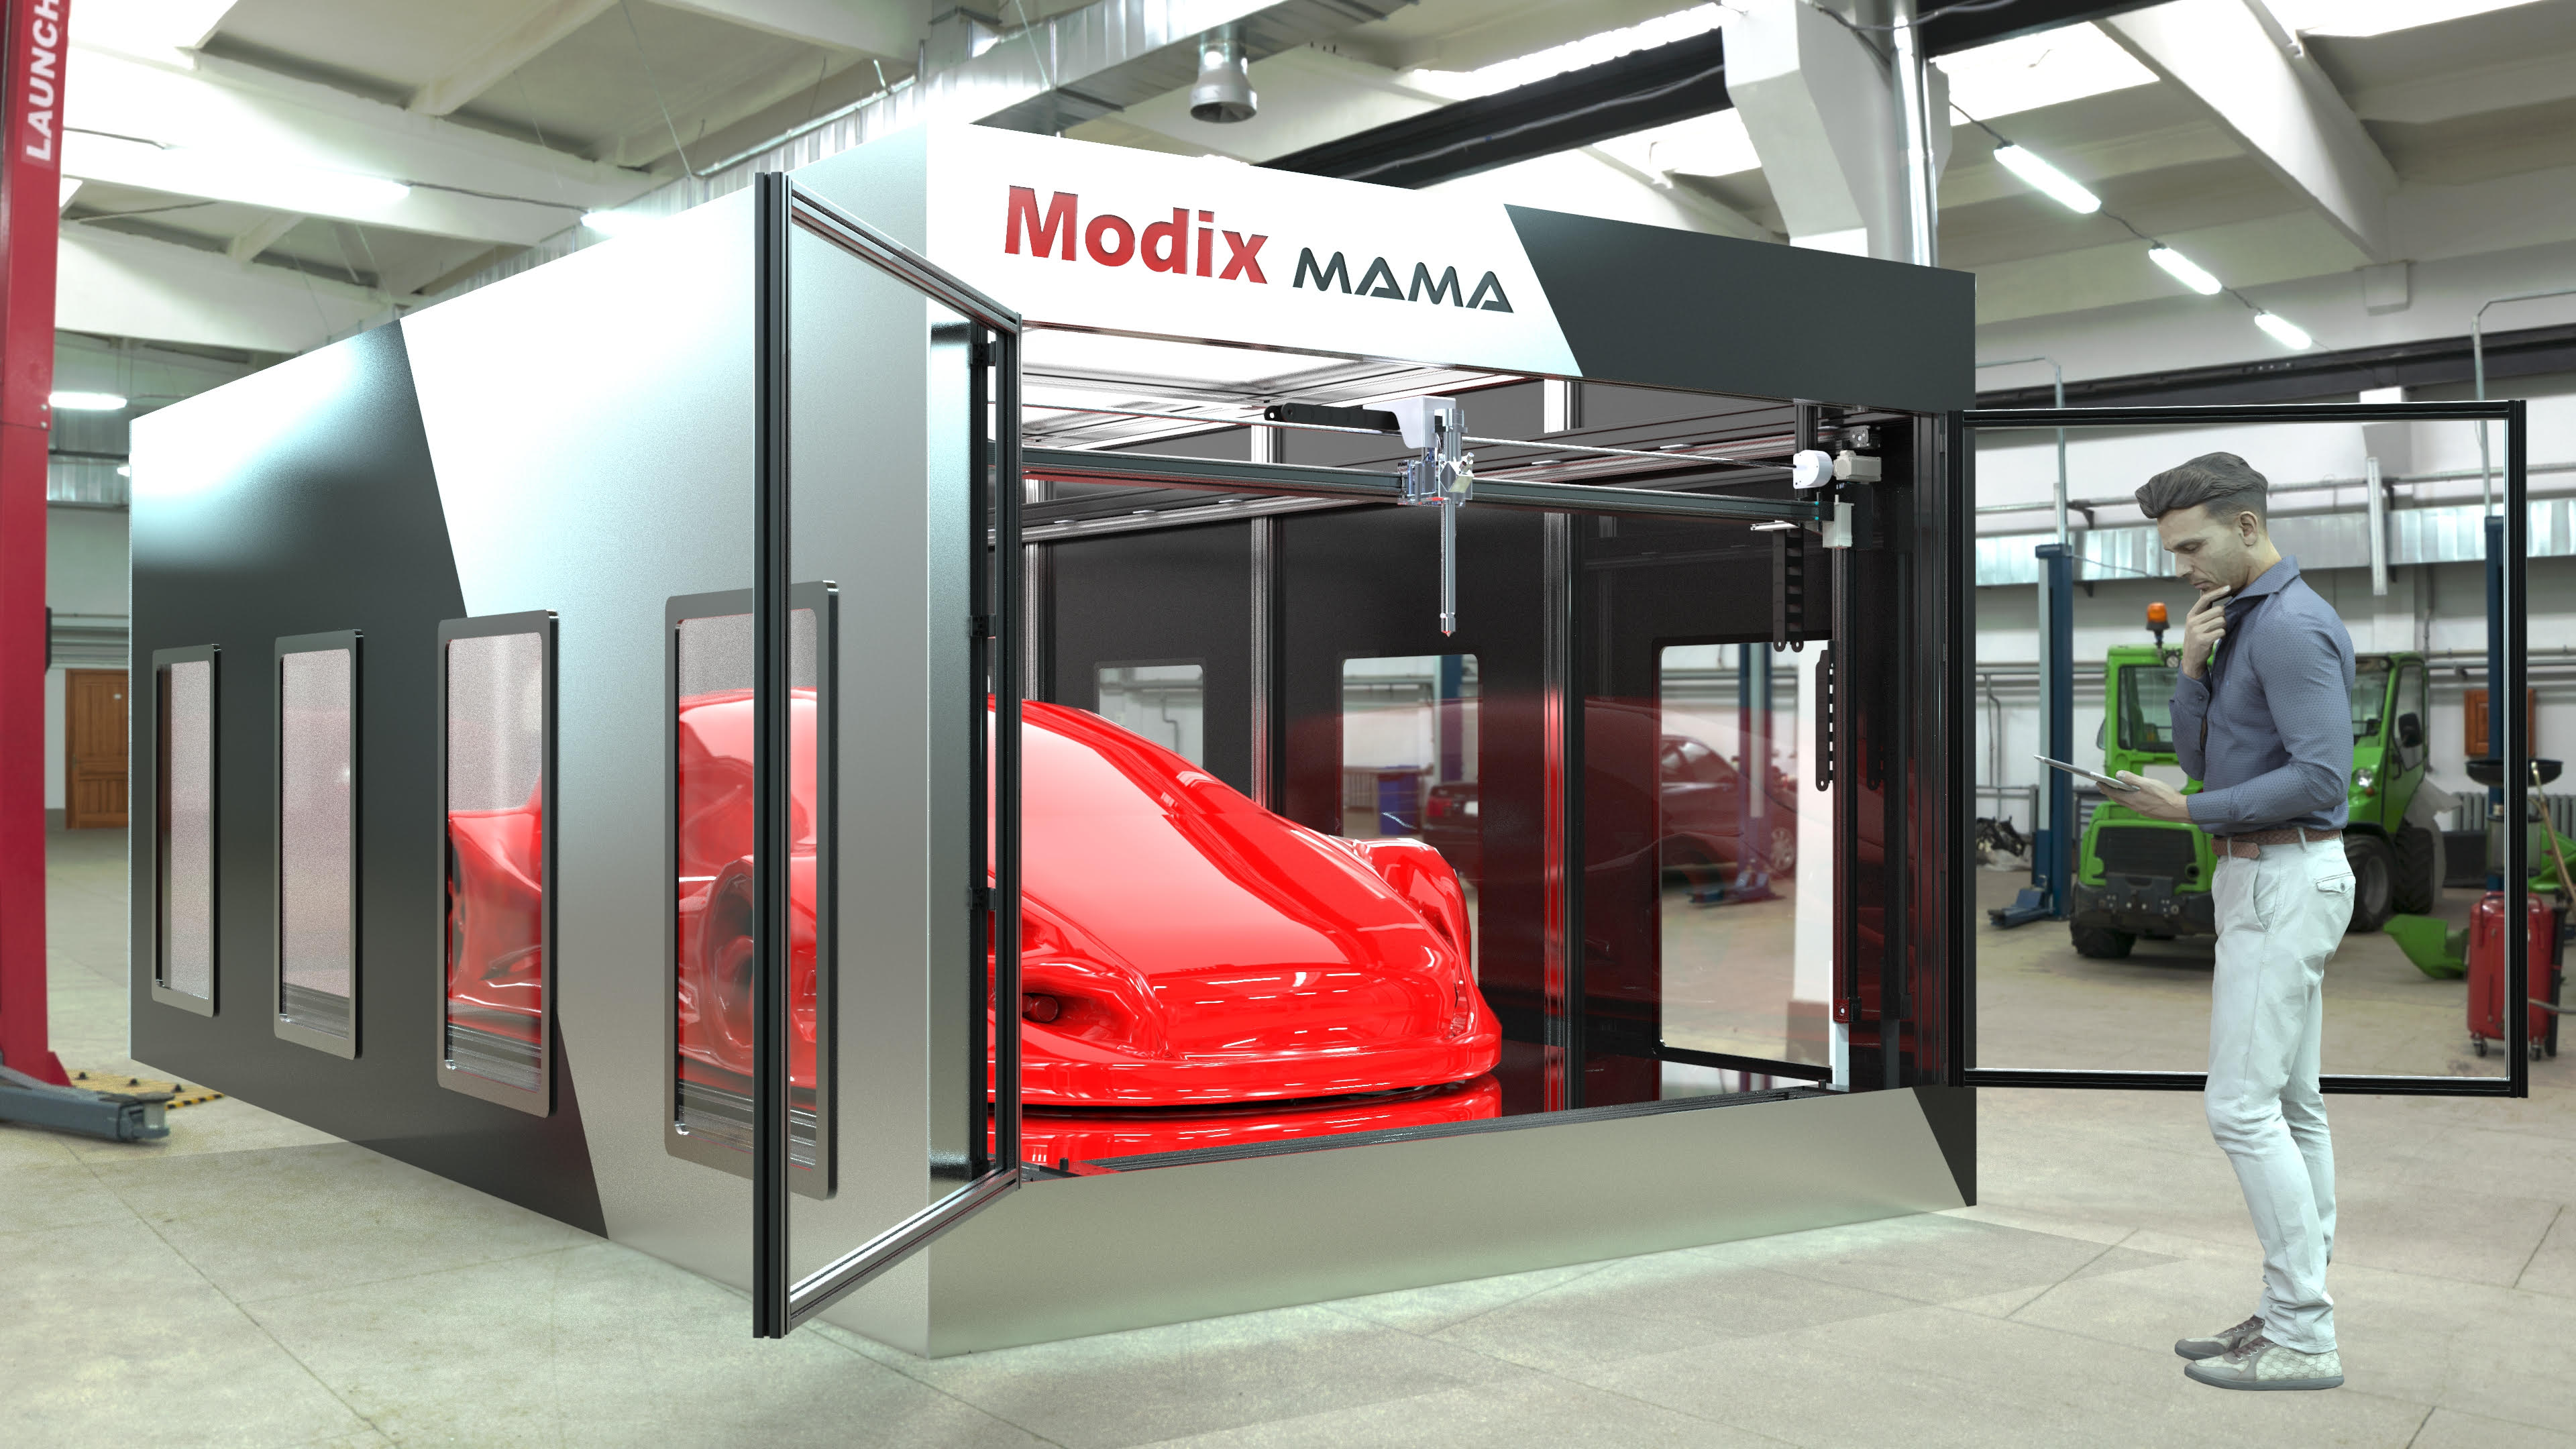 Modix launches extra large MAMA 3D printer, capable of making parts up ... - MoDix Big Mama 3D Printer